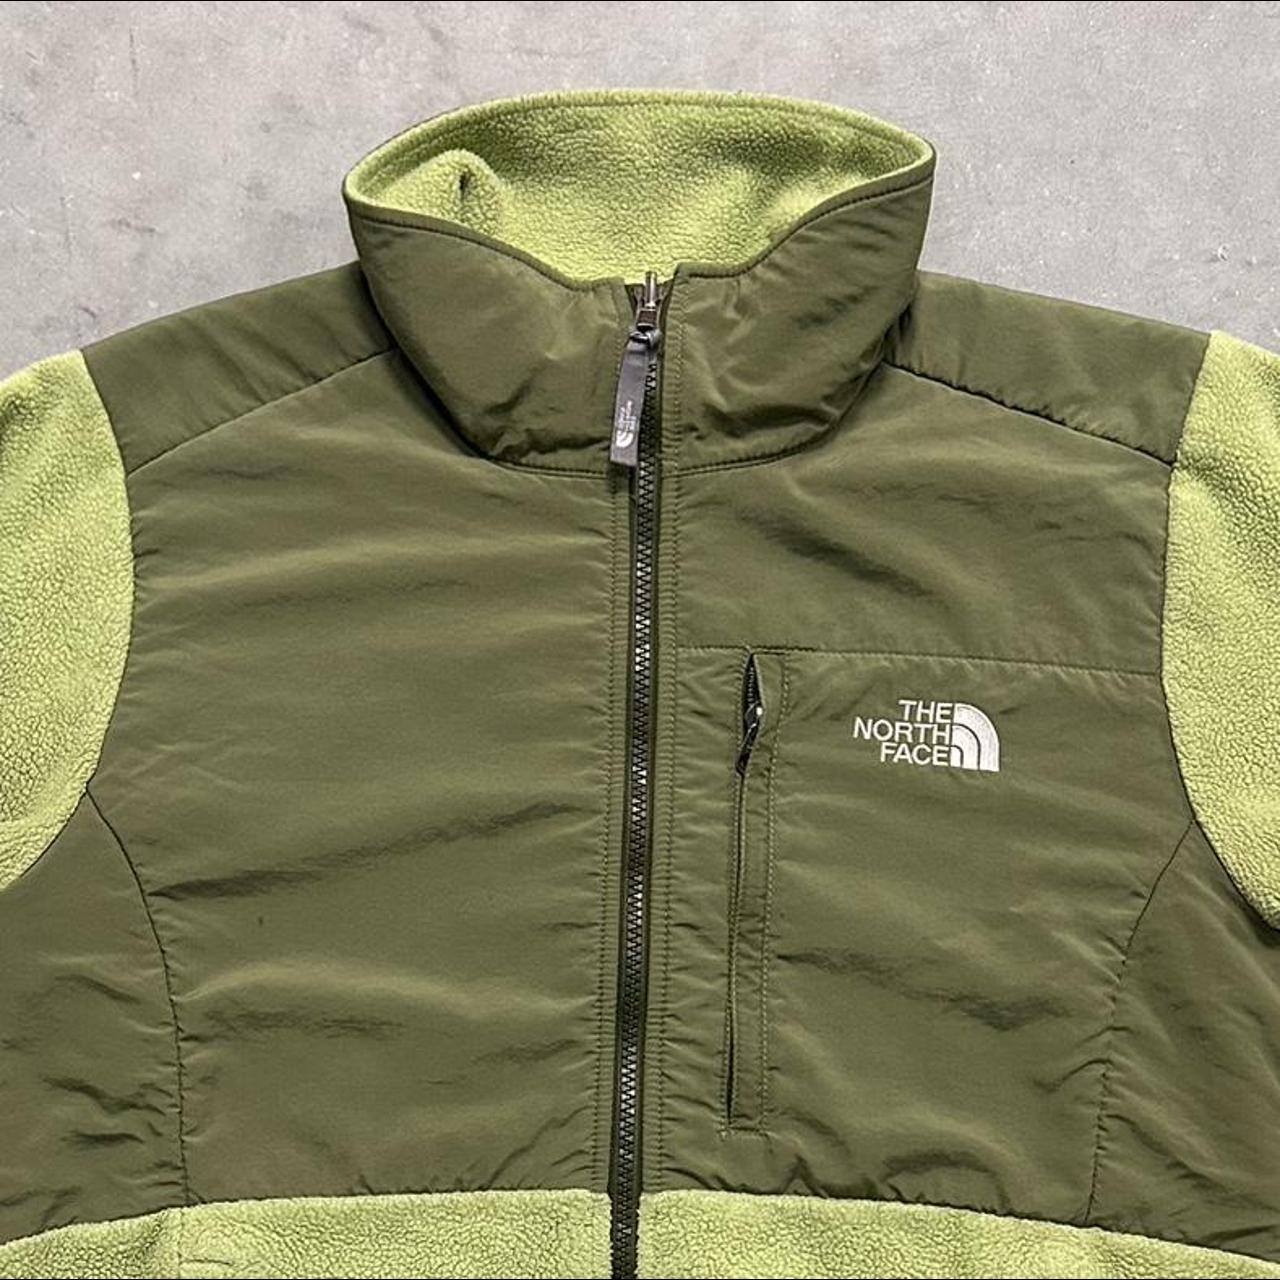 The North Face Men's Green Jacket | Depop